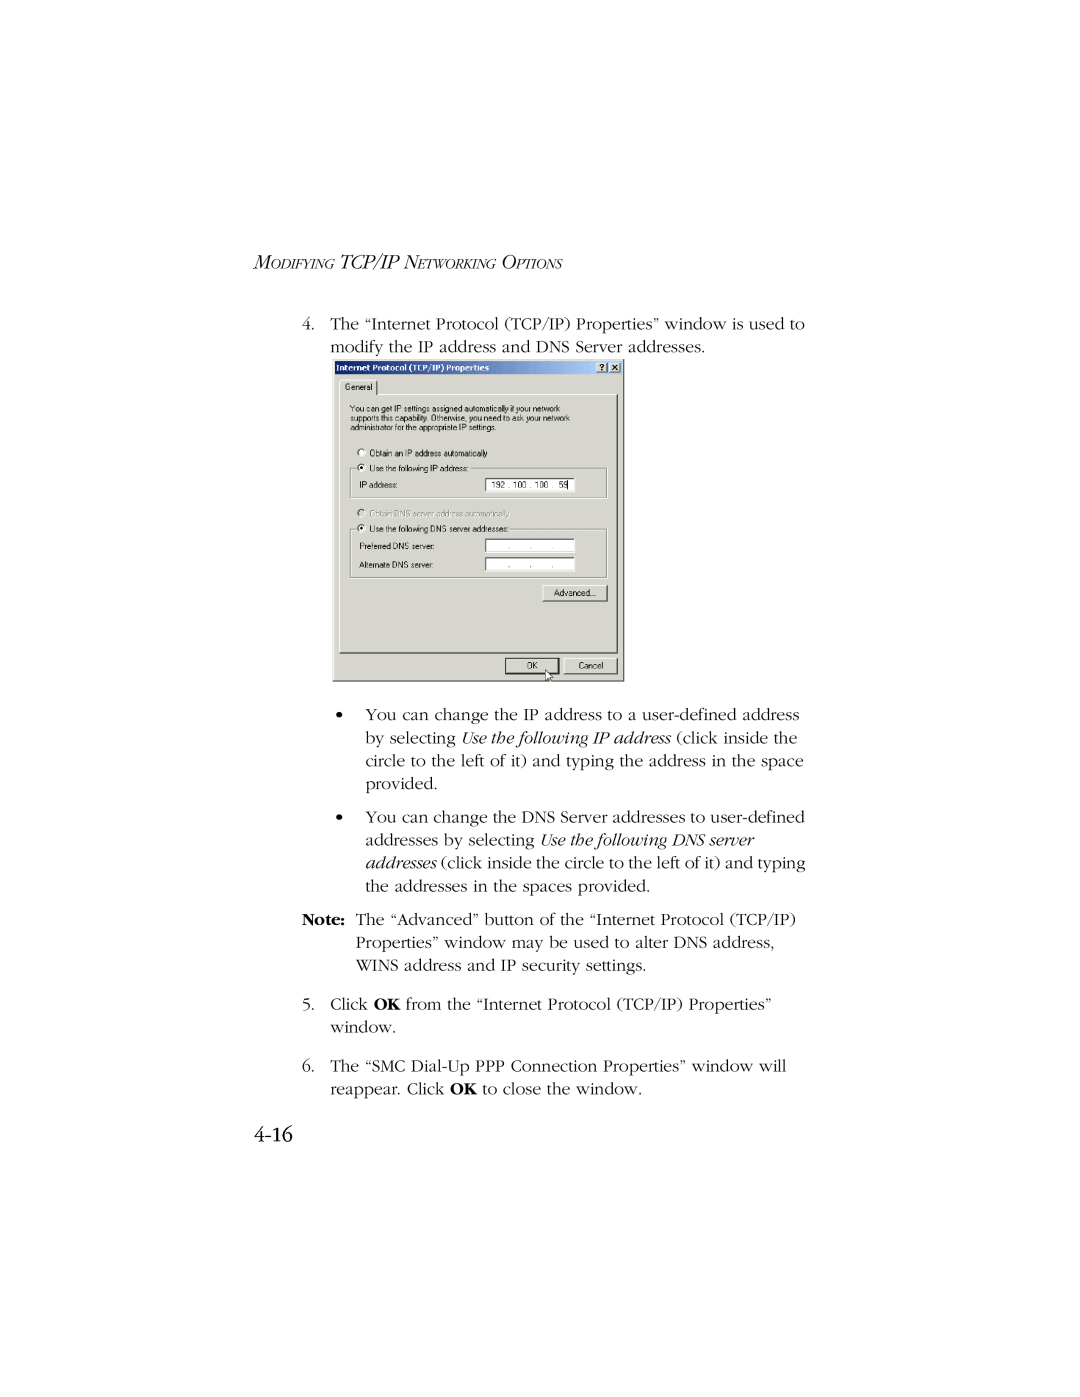 SMC Networks SMC7003-USB manual 4-16, Click OK from the “Internet Protocol TCP/IP Properties” window 